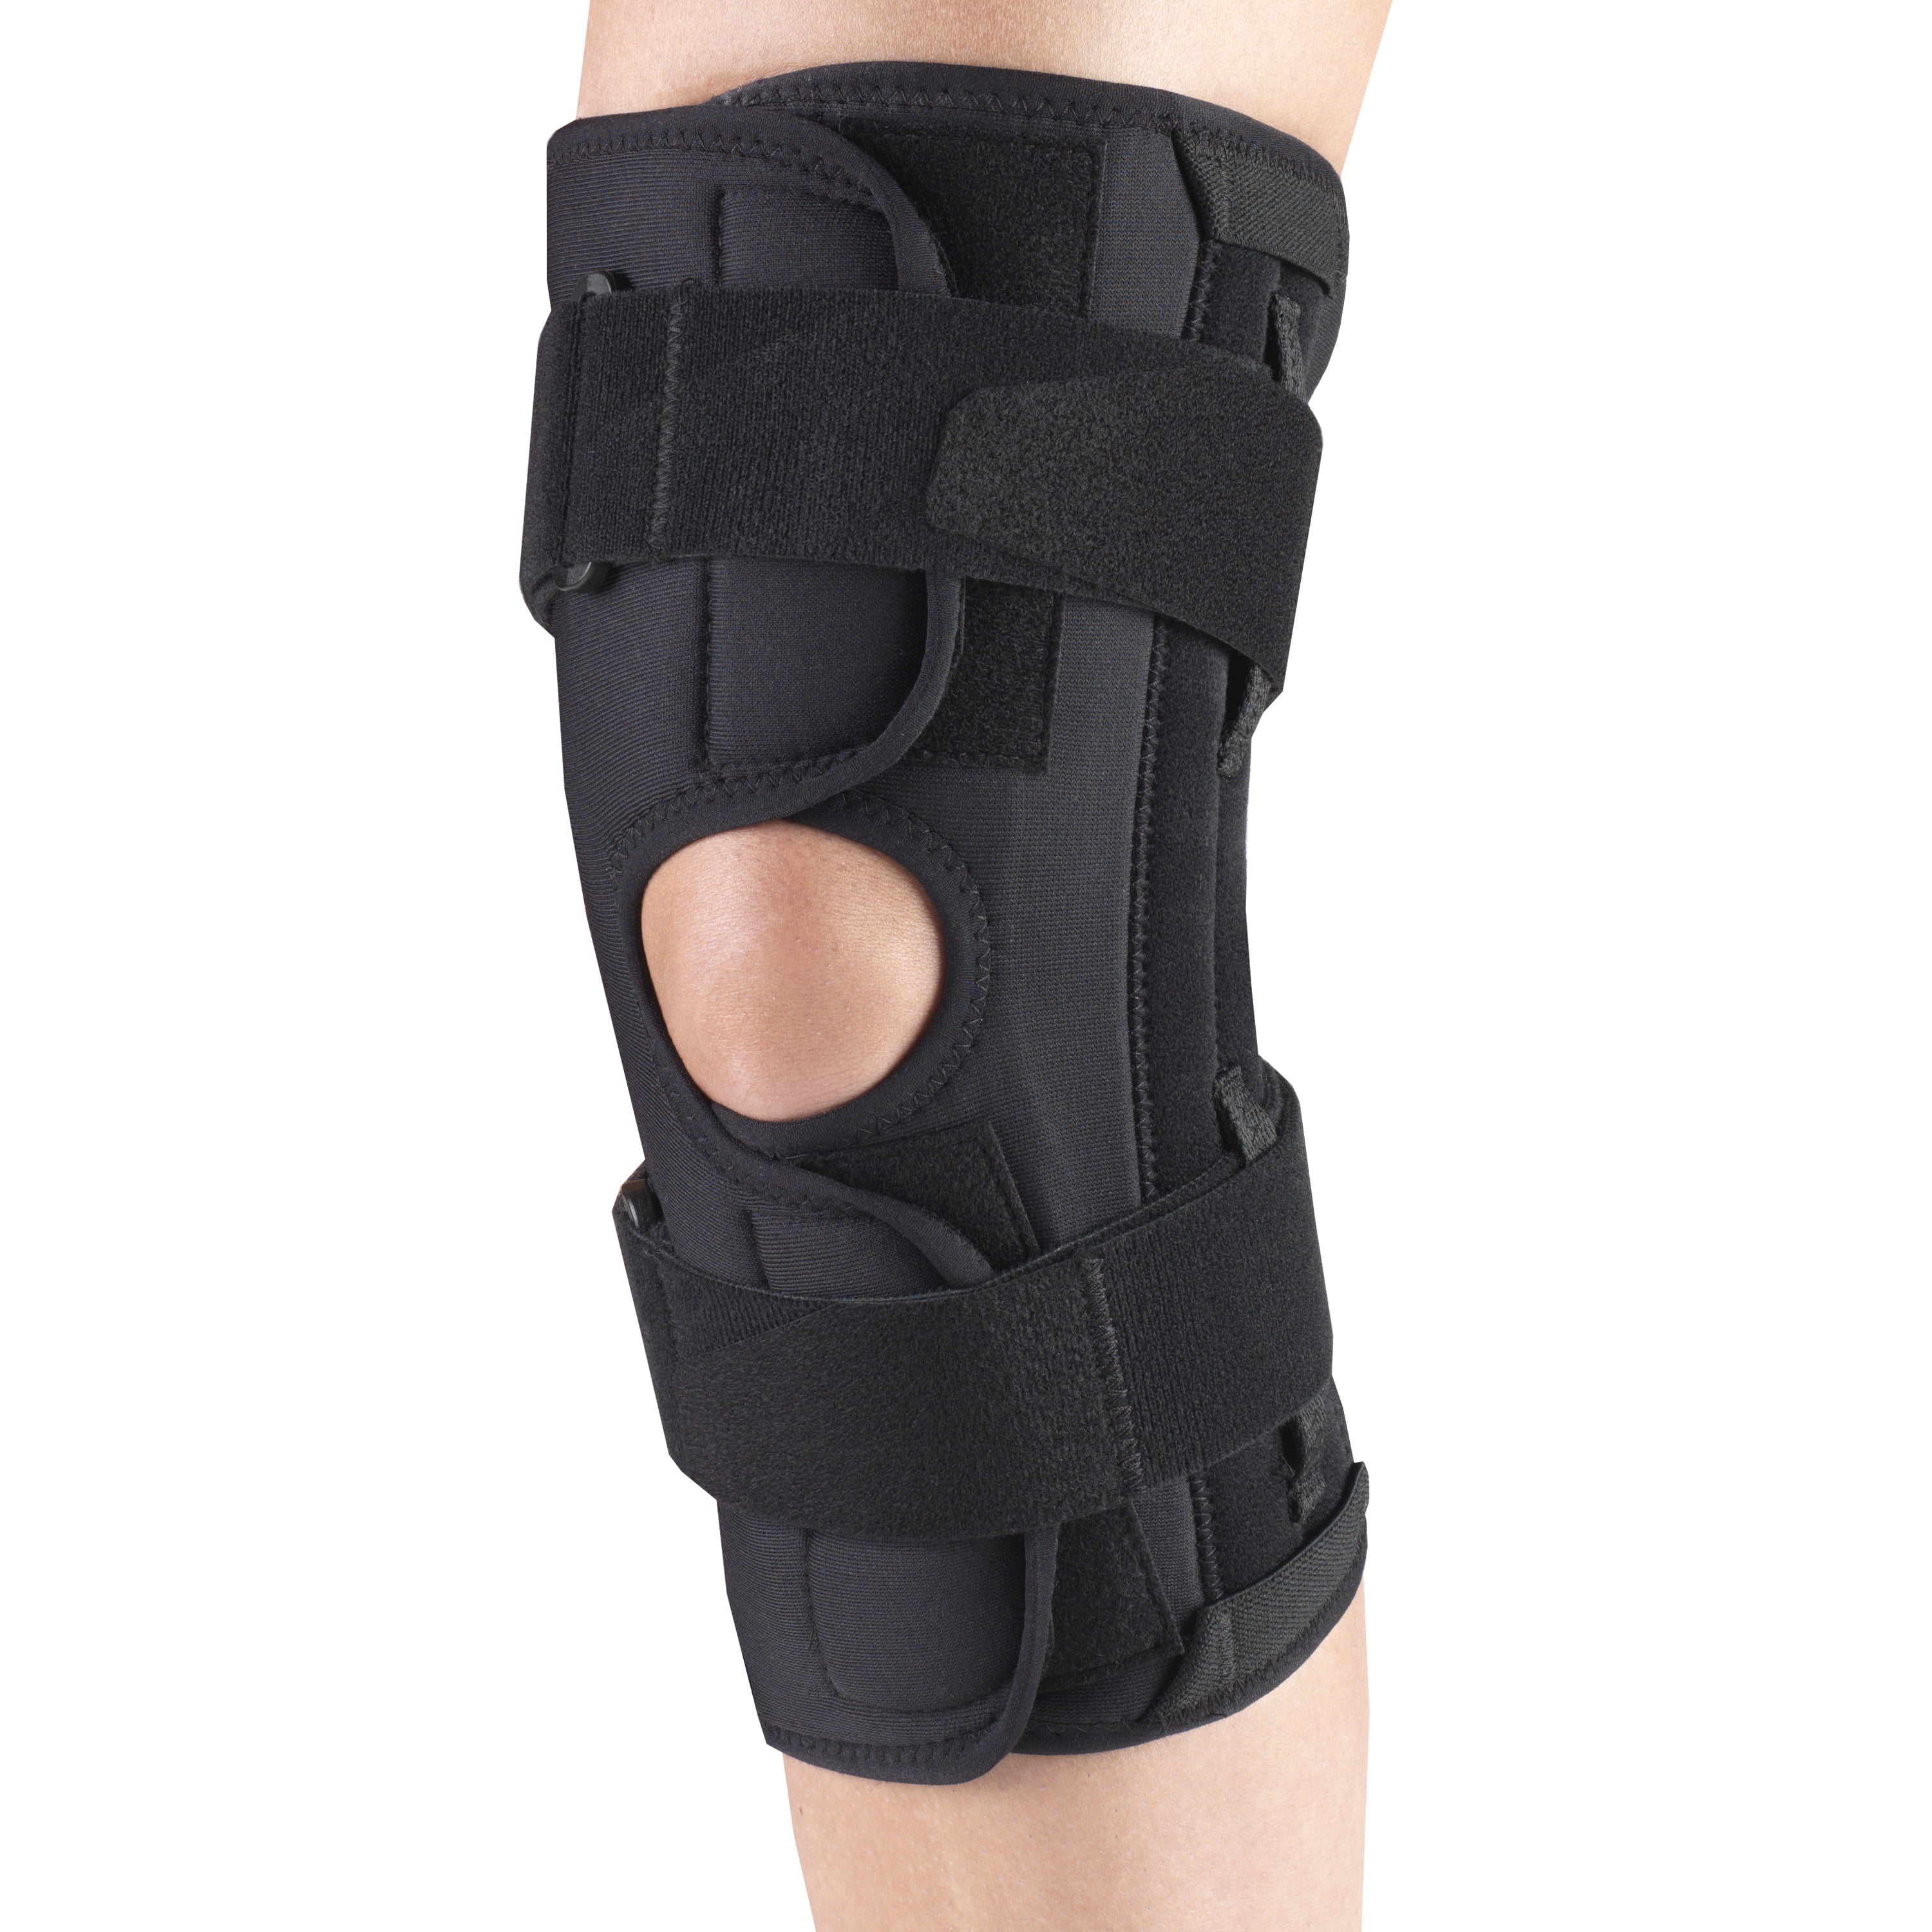 Details about   Eastic Sports Knee Brace Adjustable Patella Brace Leg Protector Wrap Pain Relief 